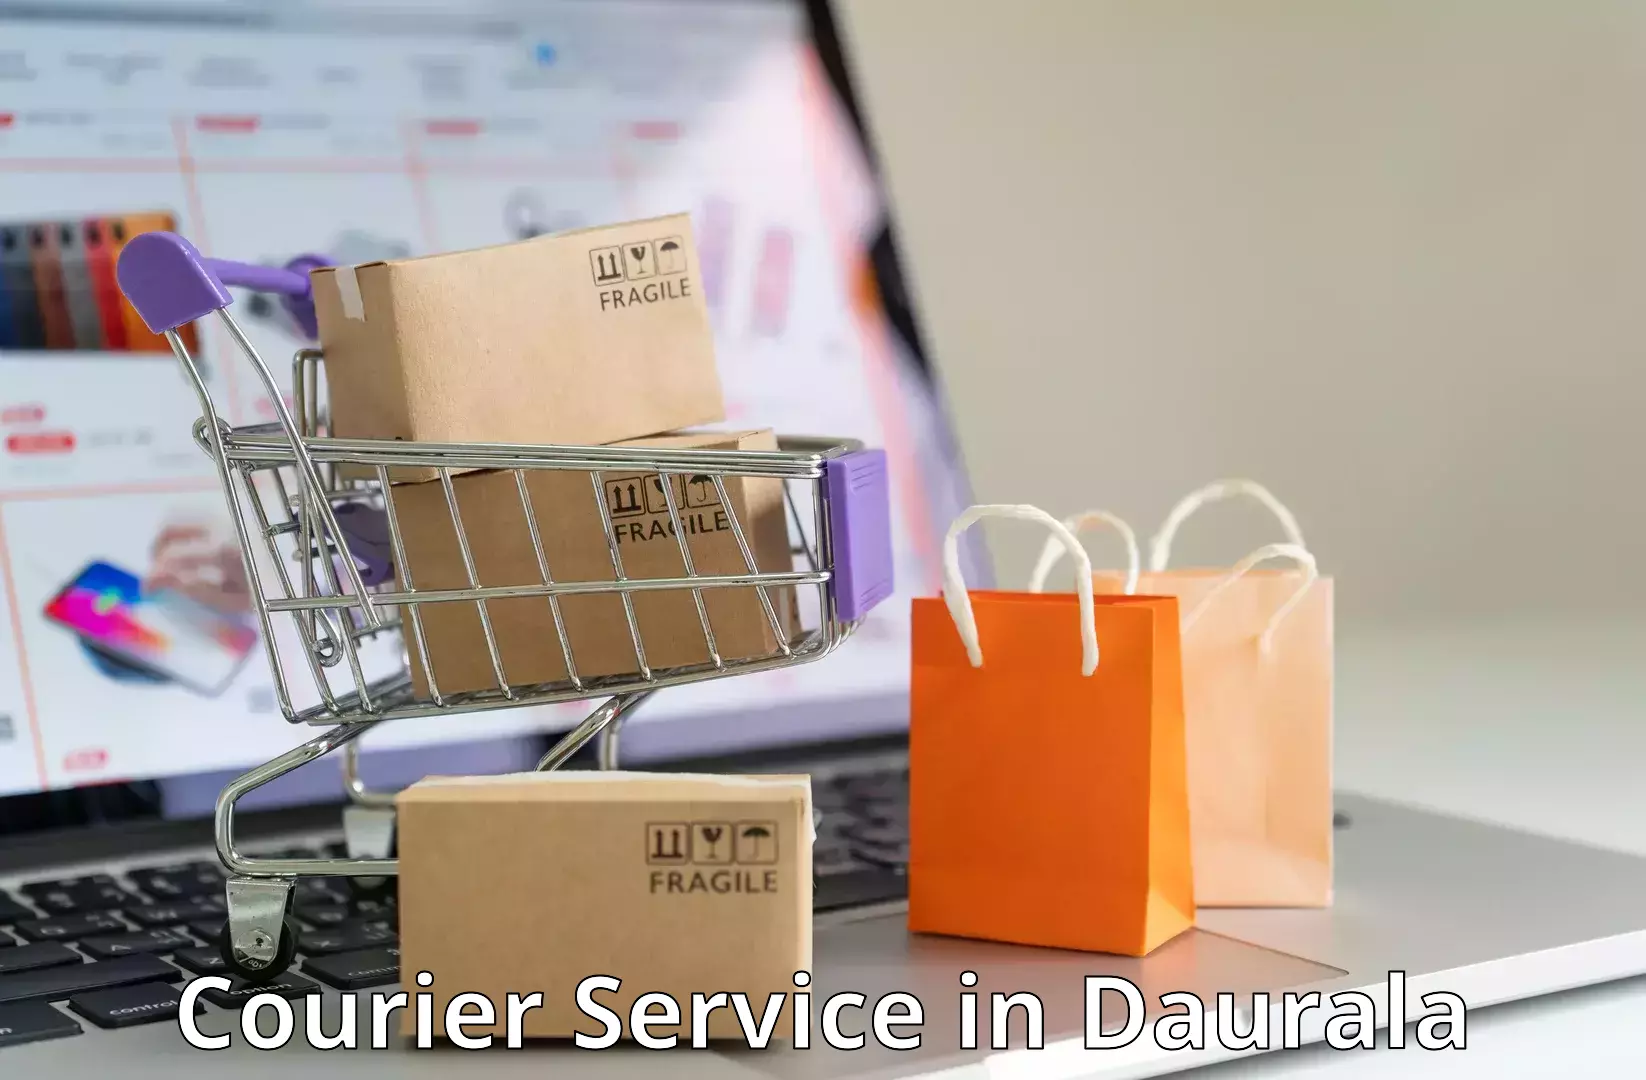 Advanced parcel tracking in Daurala